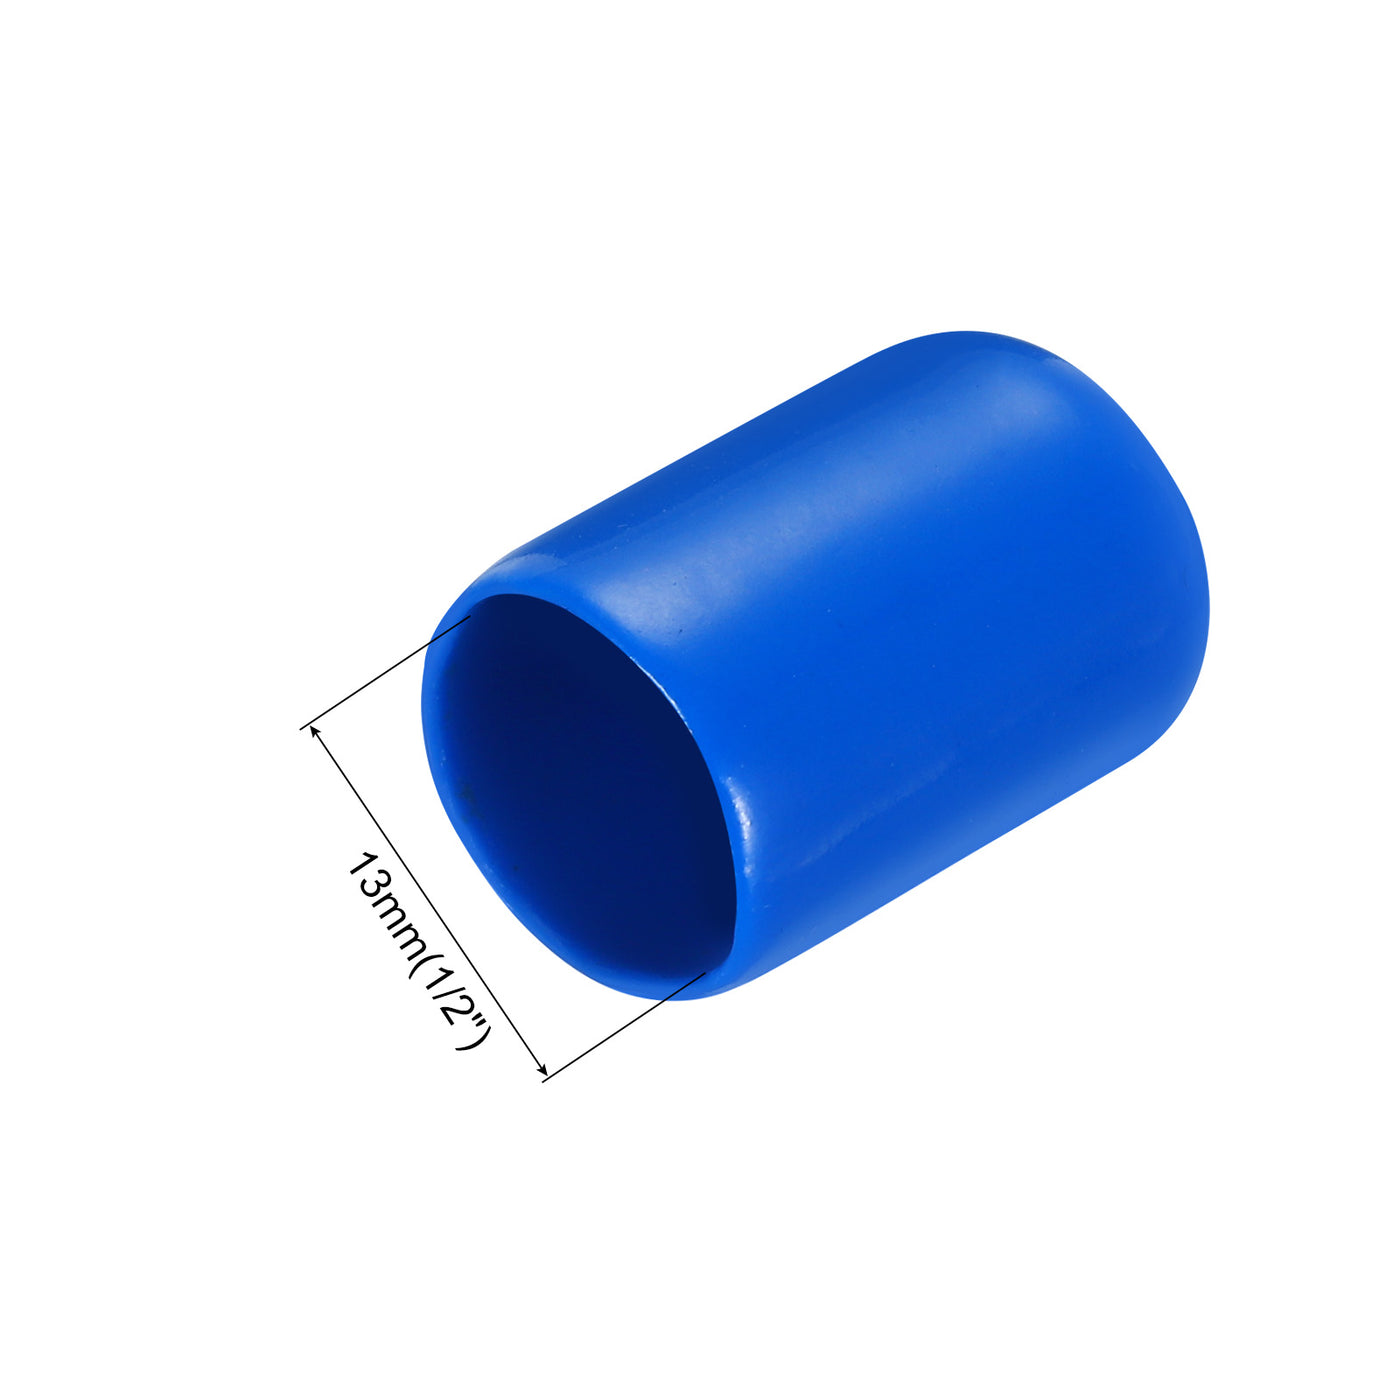 uxcell Uxcell 100pcs Rubber End Caps 13mm(1/2") ID Vinyl PVC Round Tube Bolt Cap Cover Screw Thread Protectors Blue